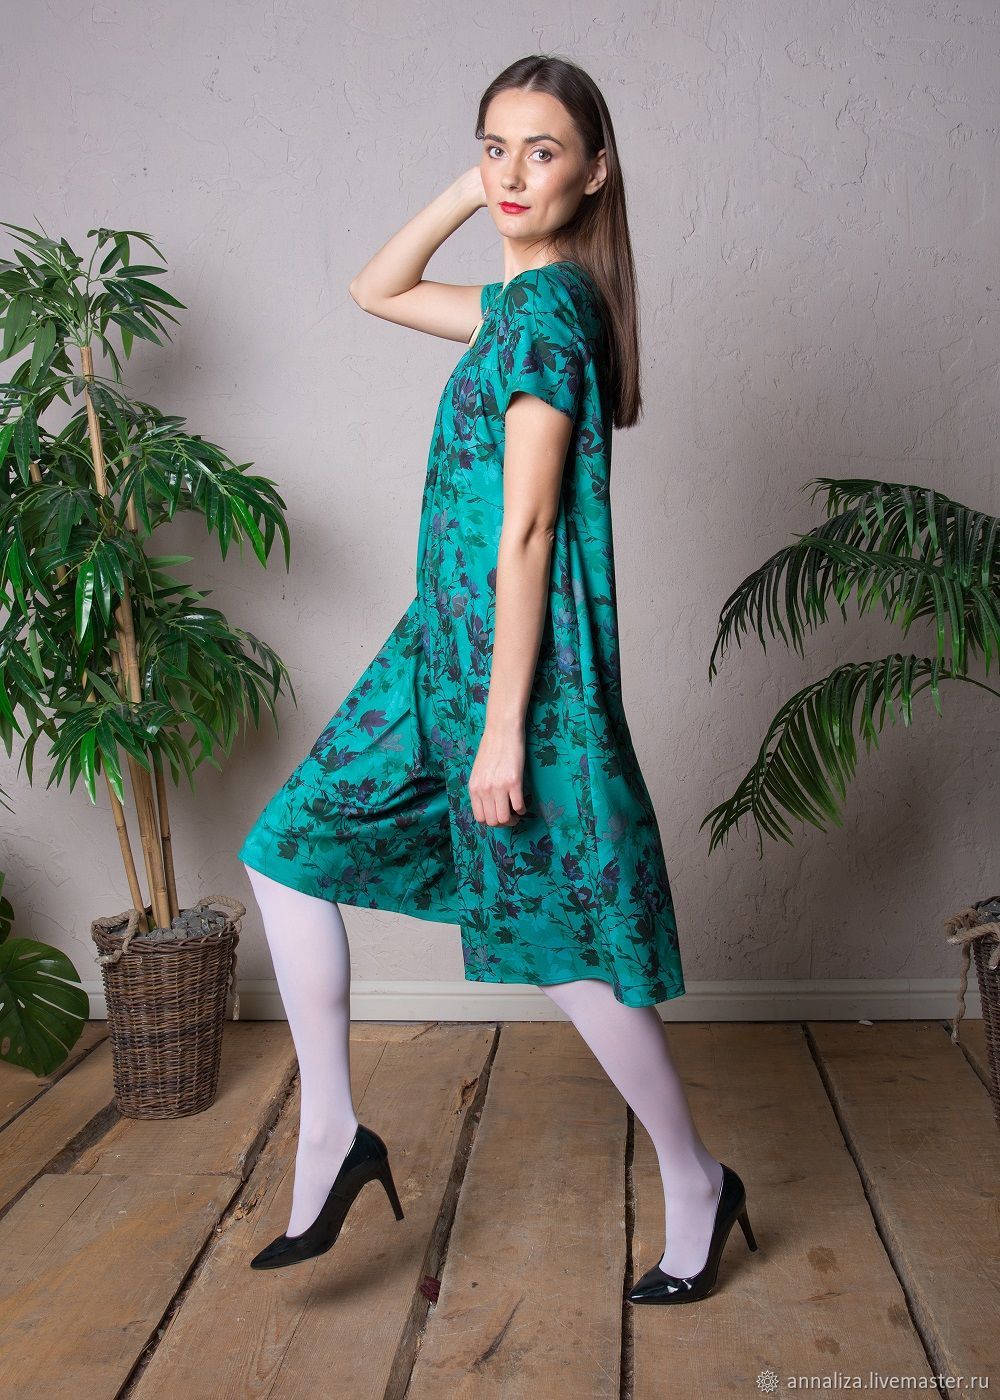 Dress-pantaloons 'Naughty 60s' Jersey, Dresses, Moscow,  Фото №1